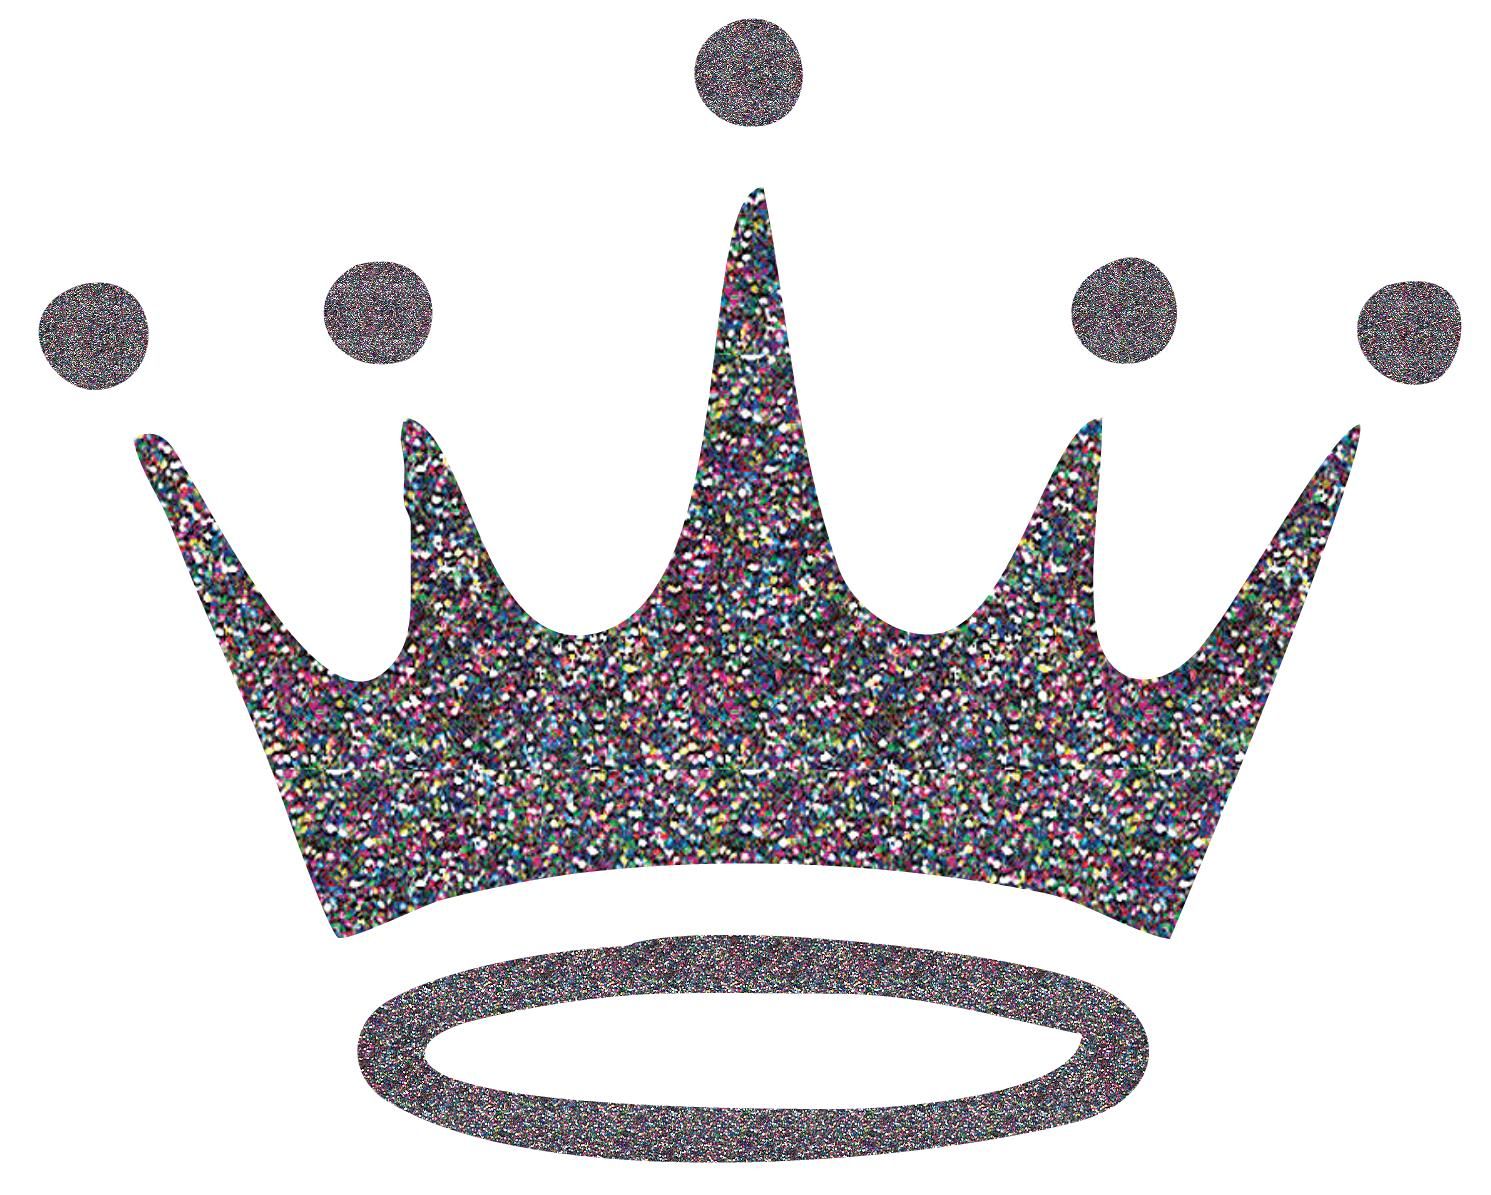 tr-crown-confetti.jpg